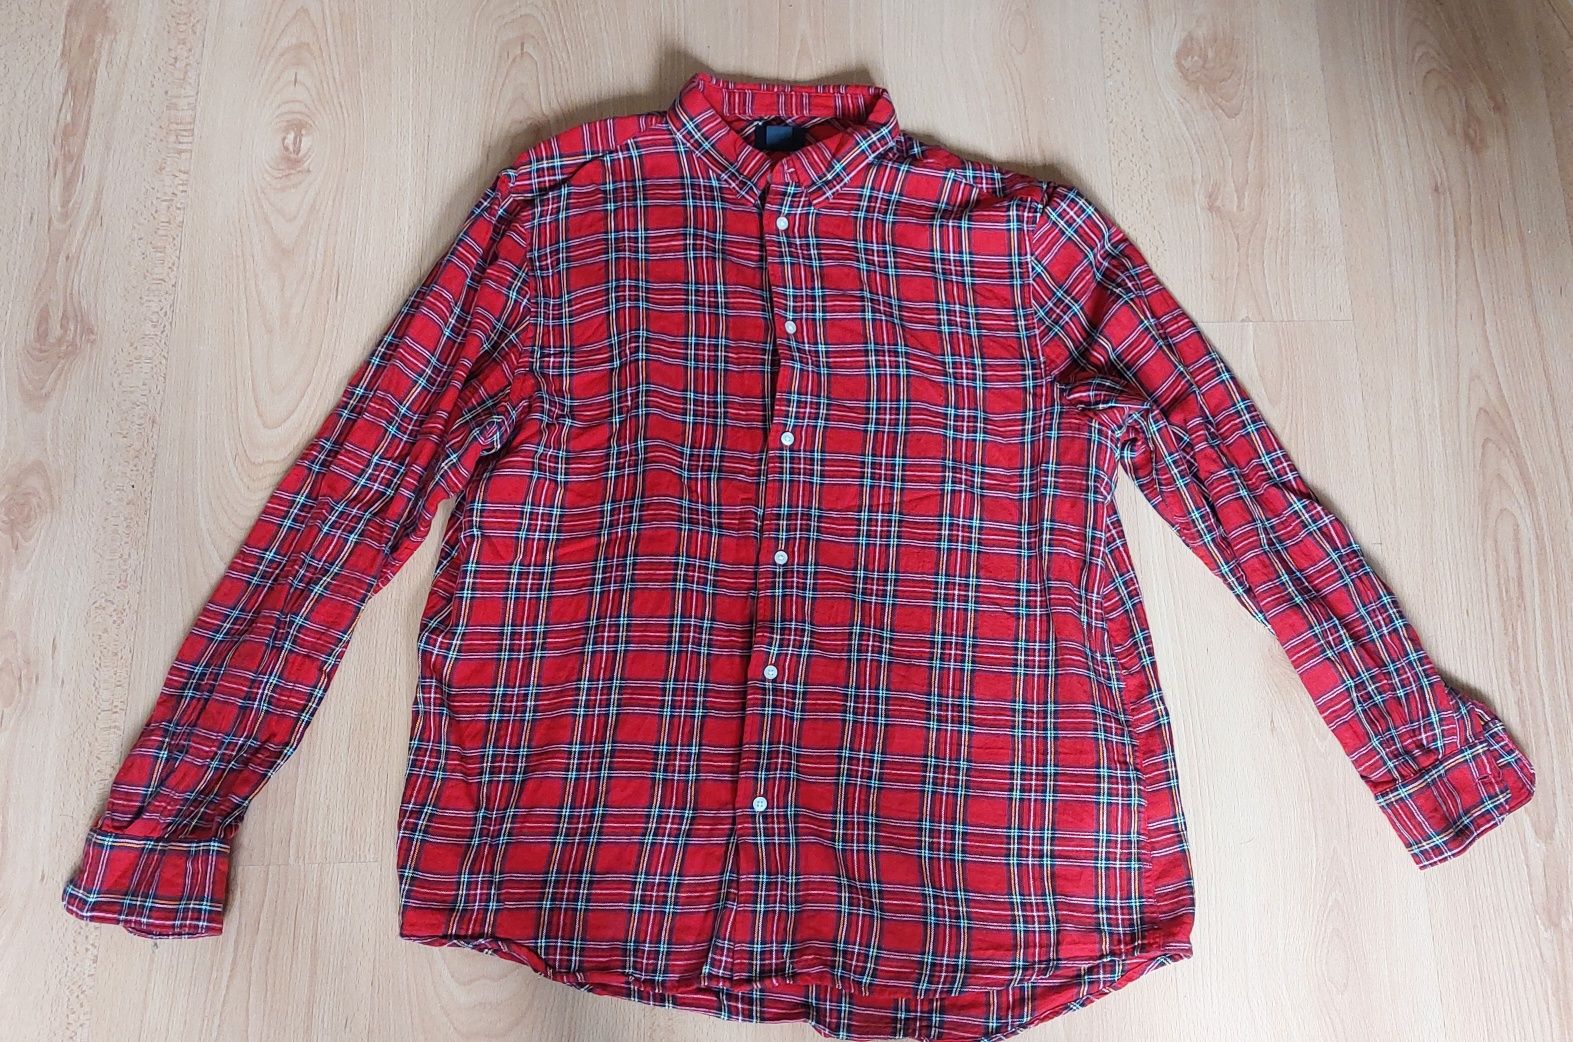 Koszula męska w kratę H&M XL Regular Fit czerwona